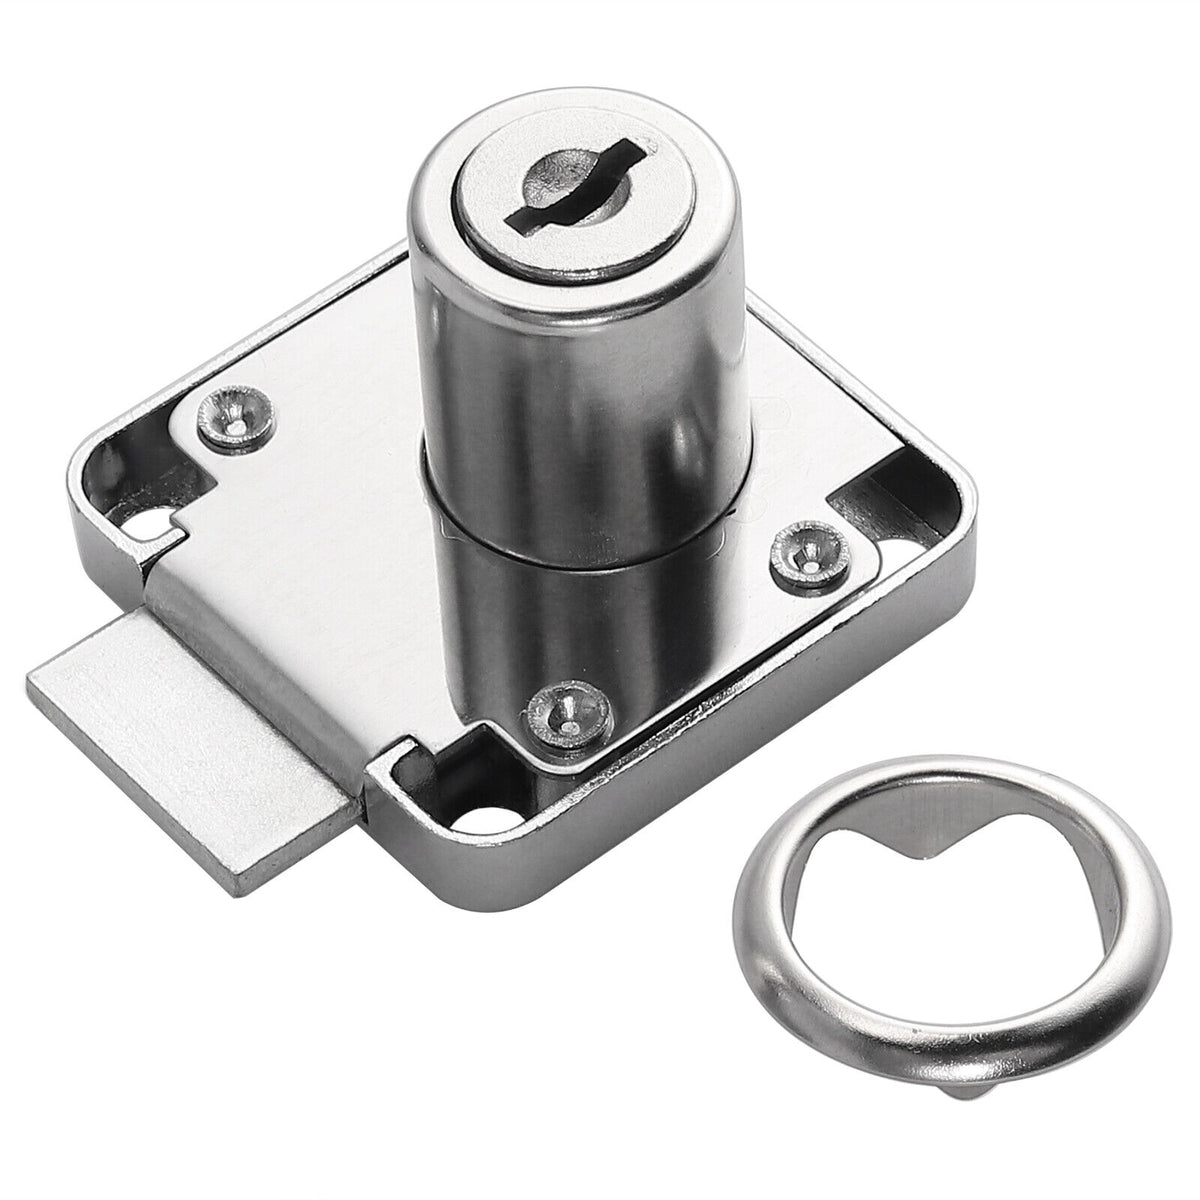 Cabinet Lock - 19mm hole diametre